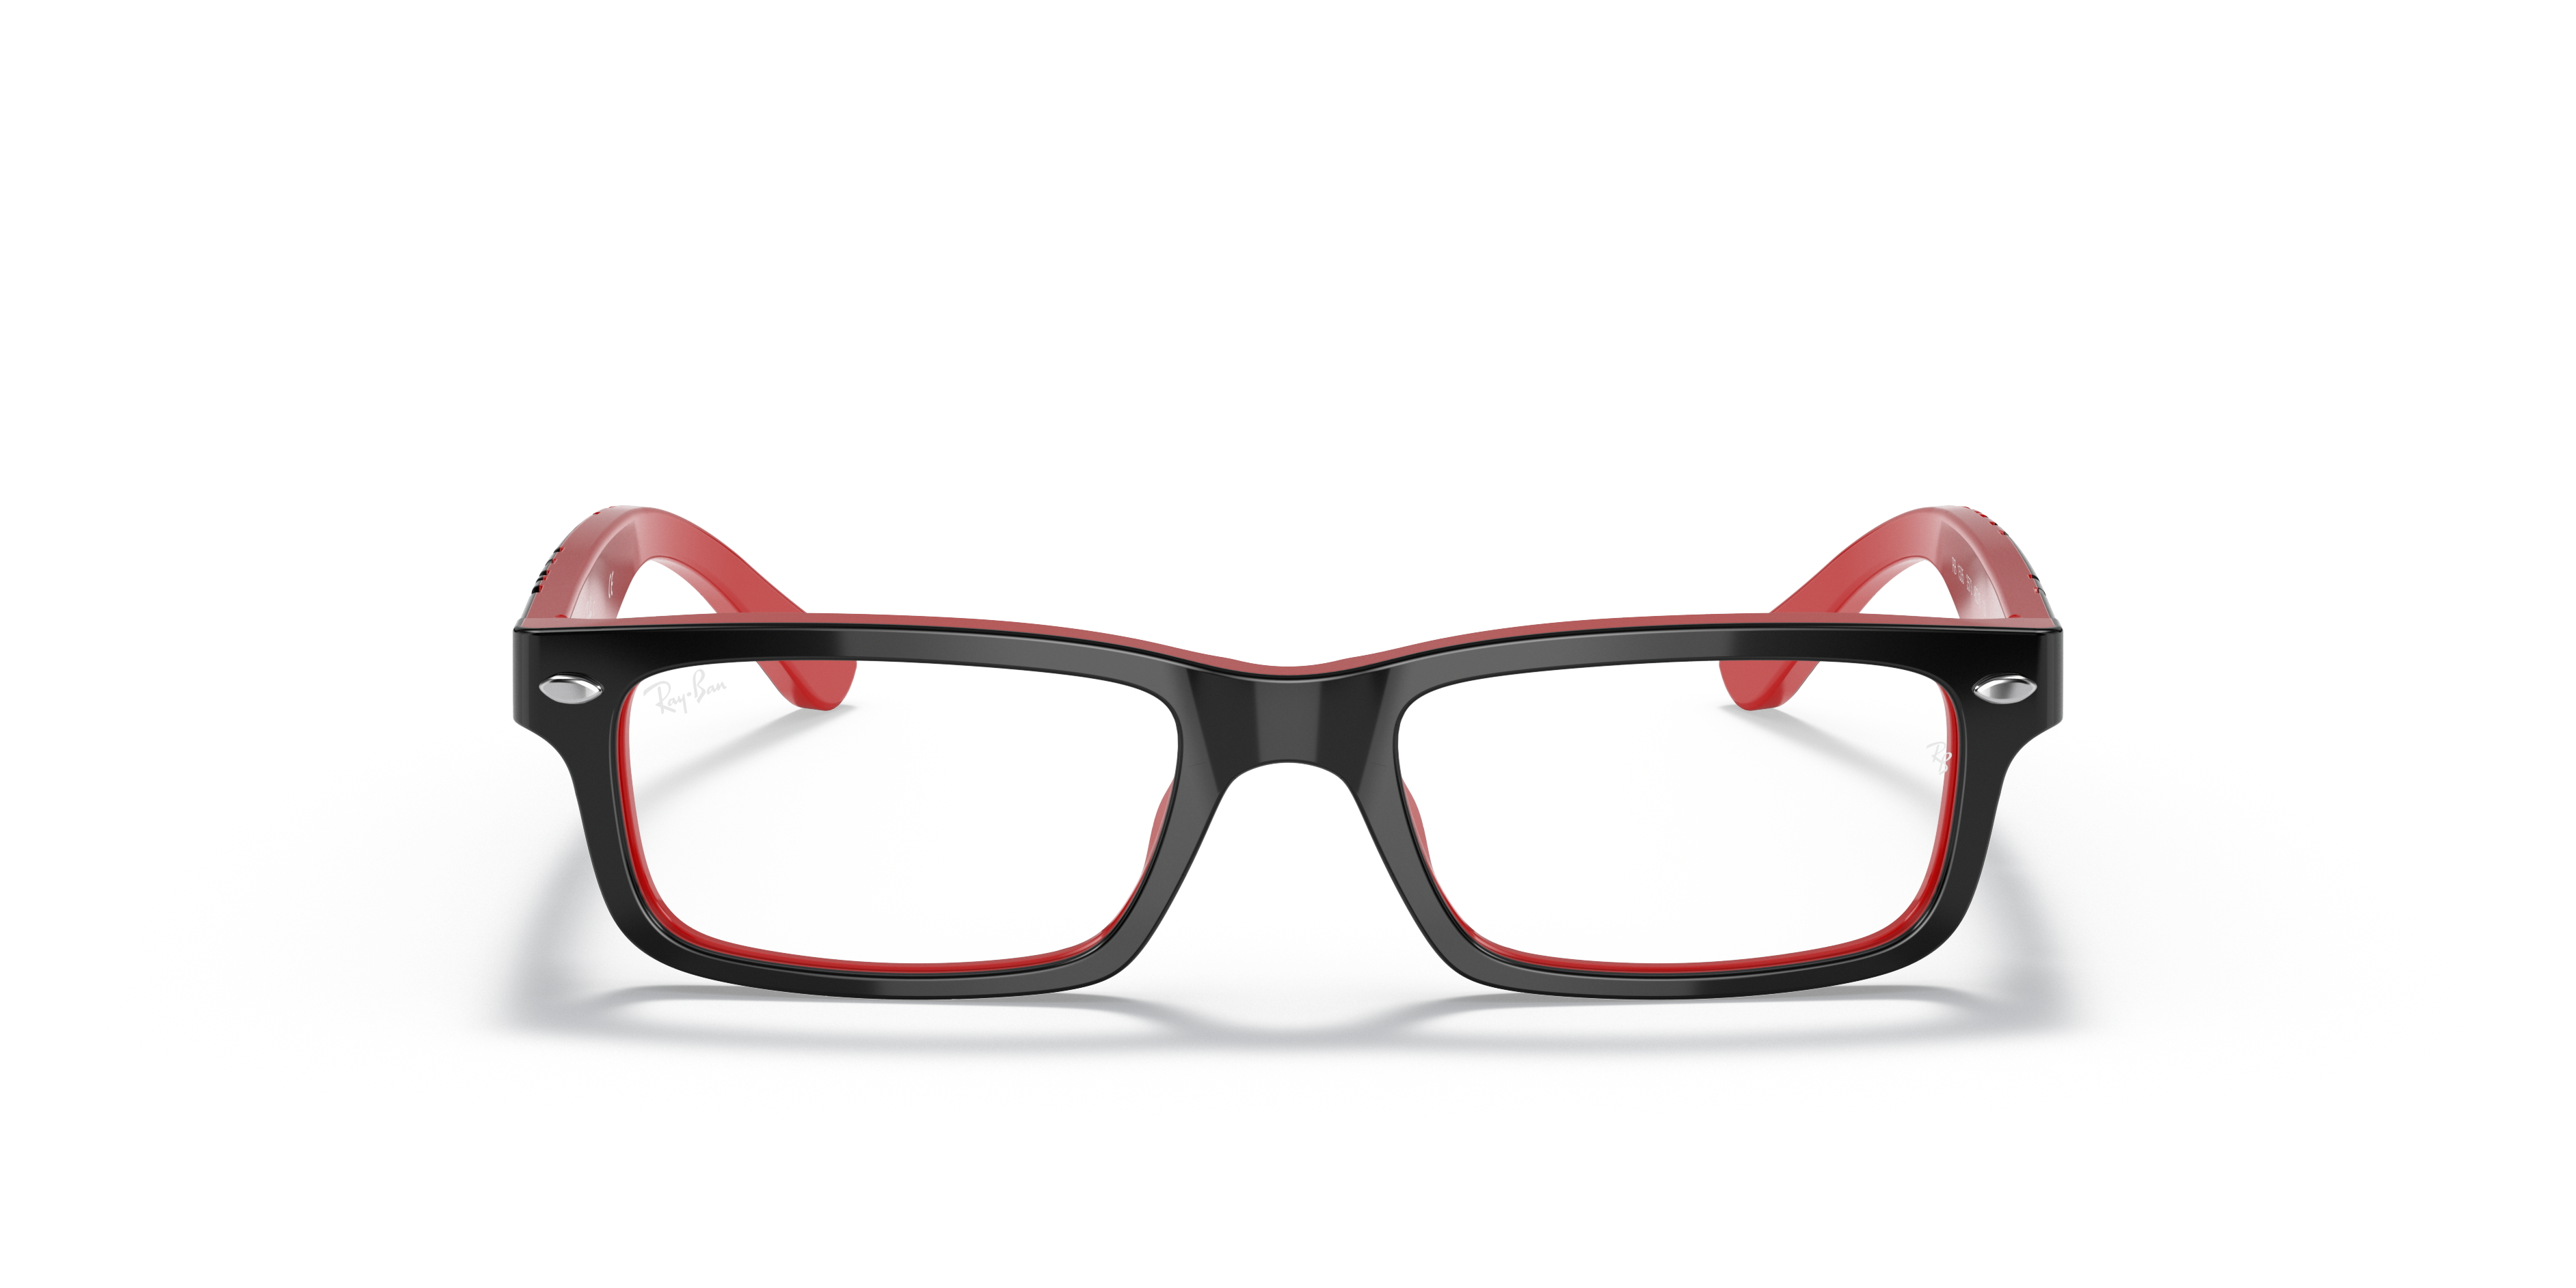 16 130 Ray-Ban Small Eyeglasses RB 1535 3573 Zwart/Rood Rechthoekig Frame 48 Accessoires Zonnebrillen & Eyewear Brillen 